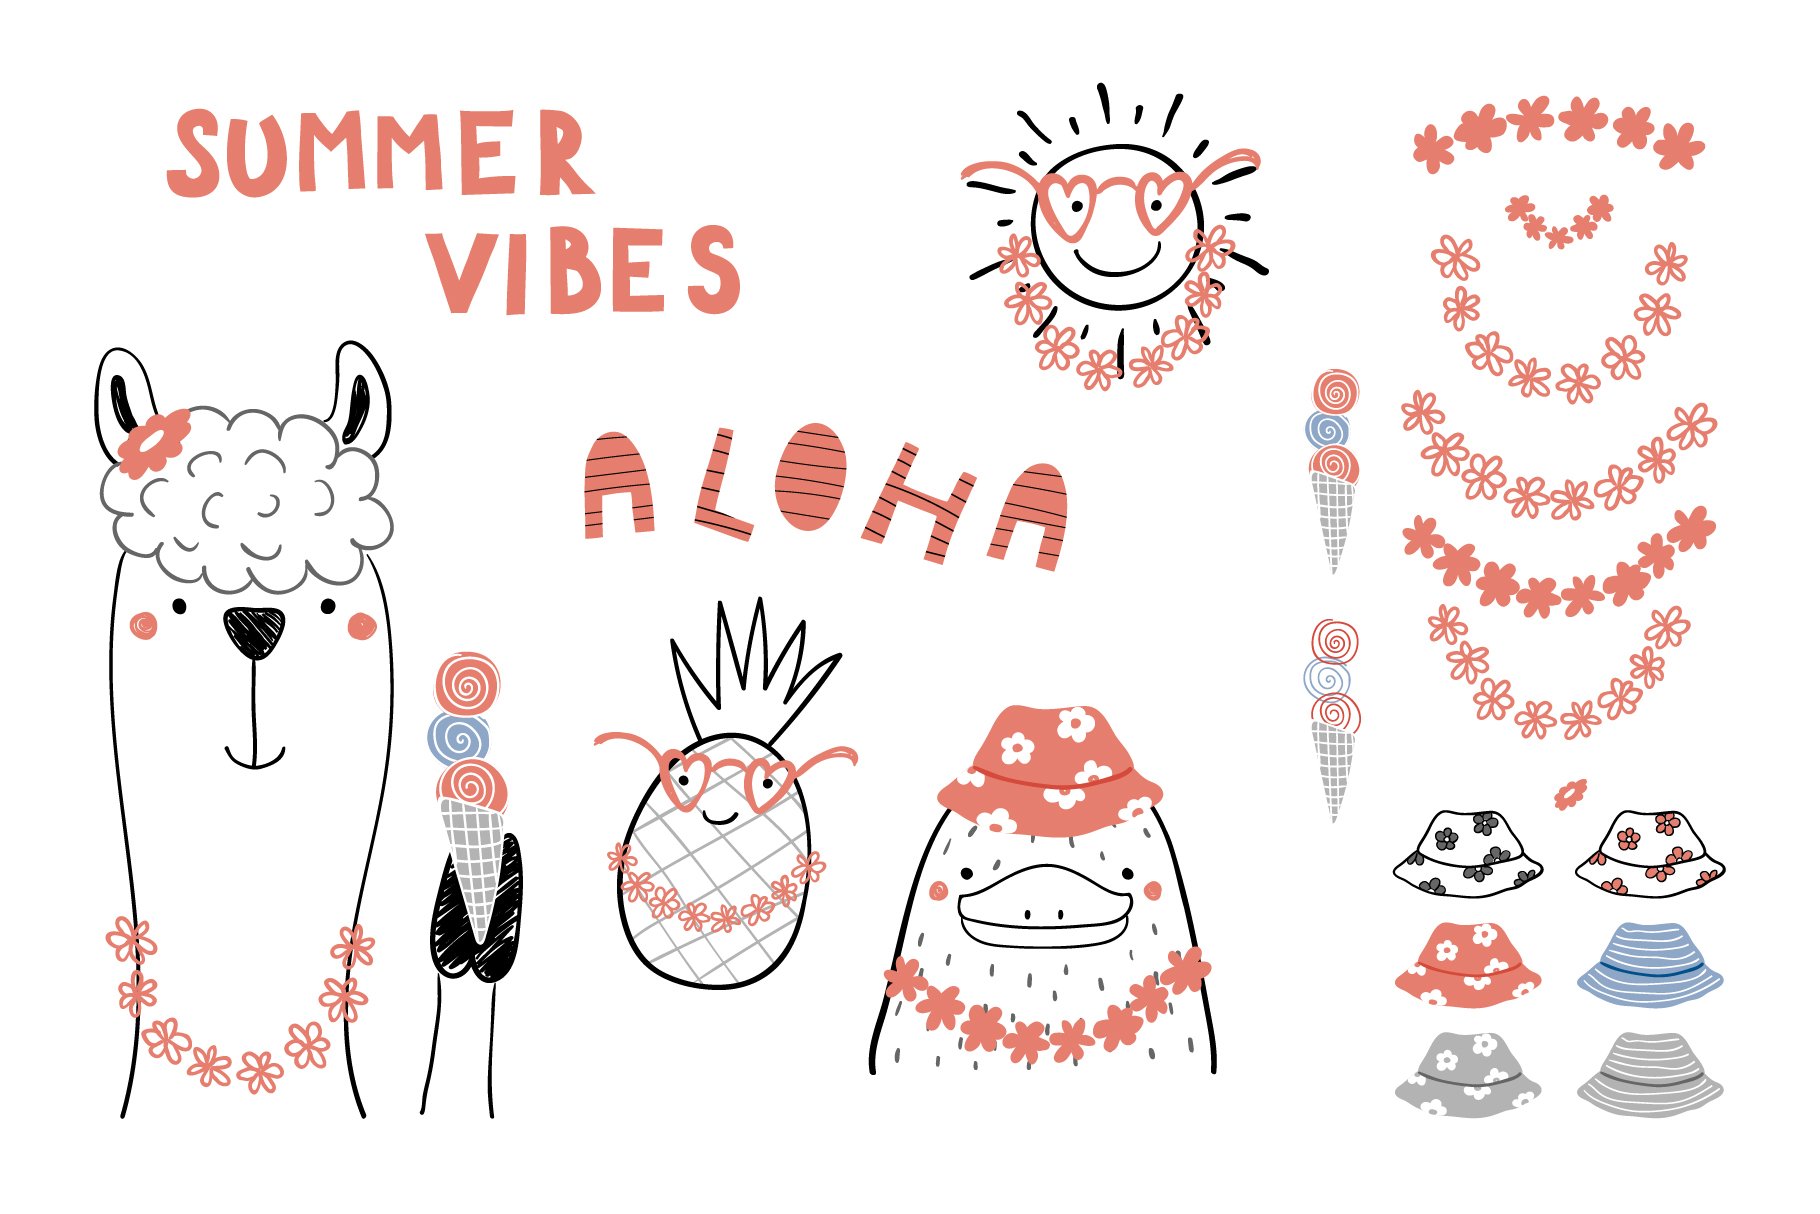 Summer vibes.